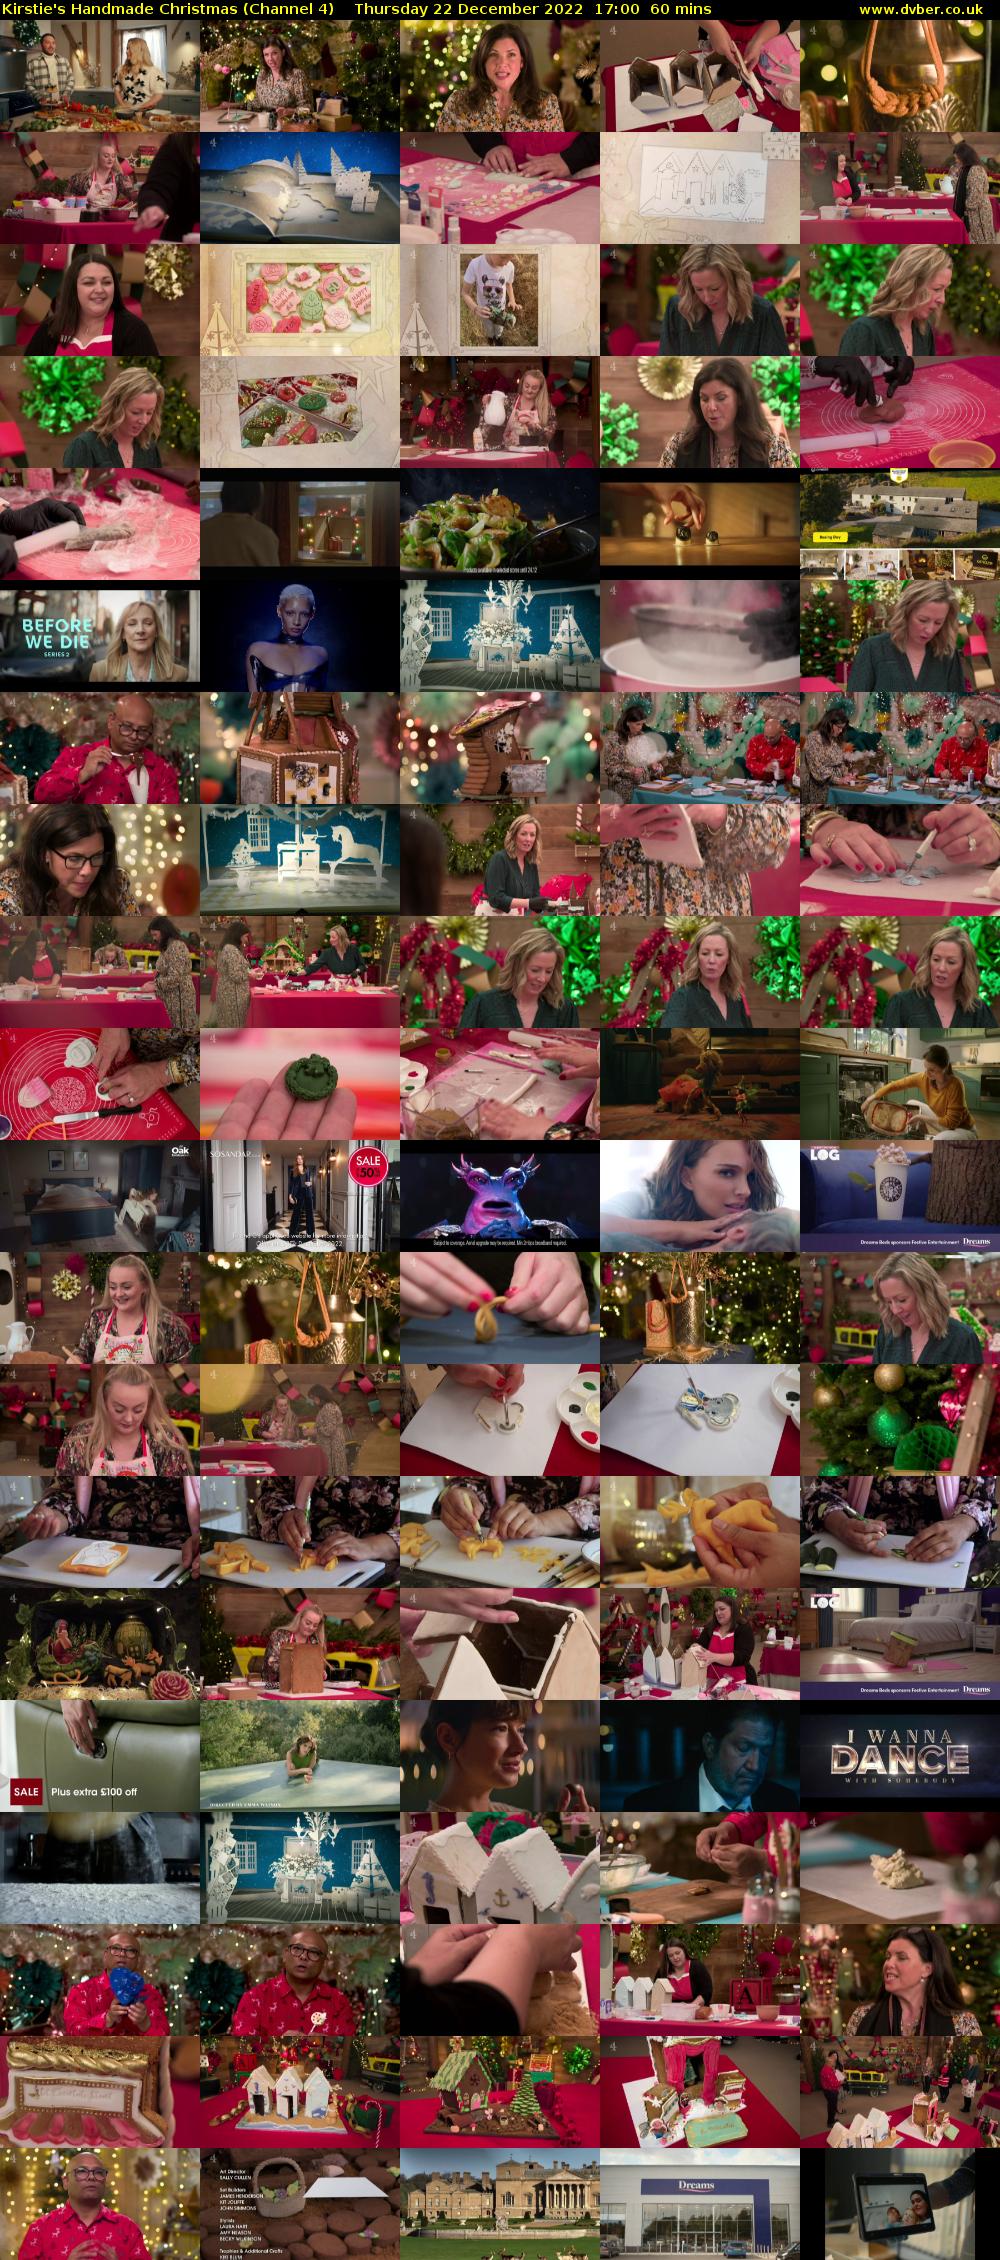 Kirstie's Handmade Christmas (Channel 4) Thursday 22 December 2022 17:00 - 18:00